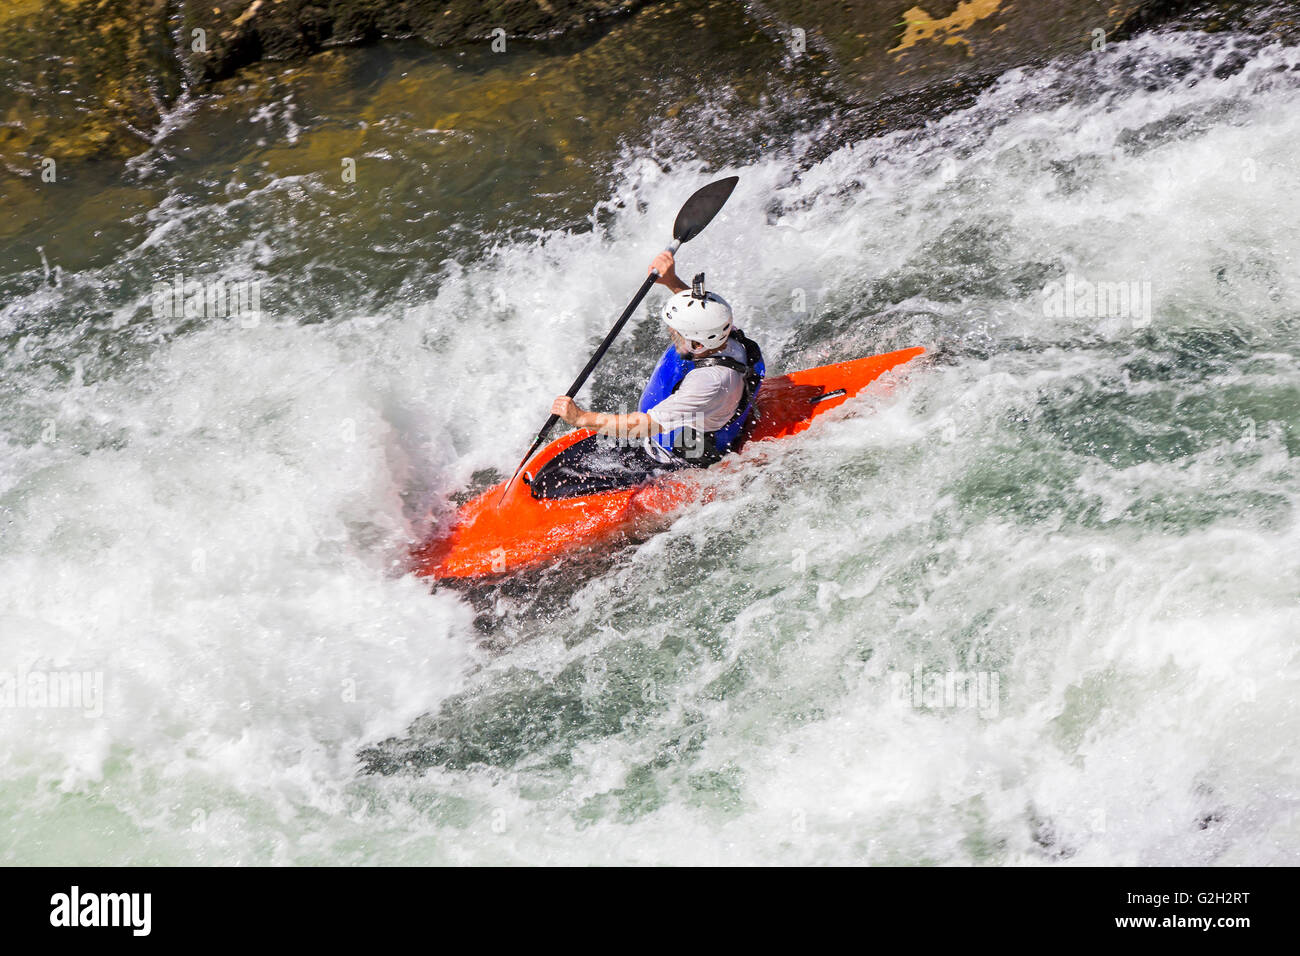 Kayaking in white water, blurred motion Stock Photo